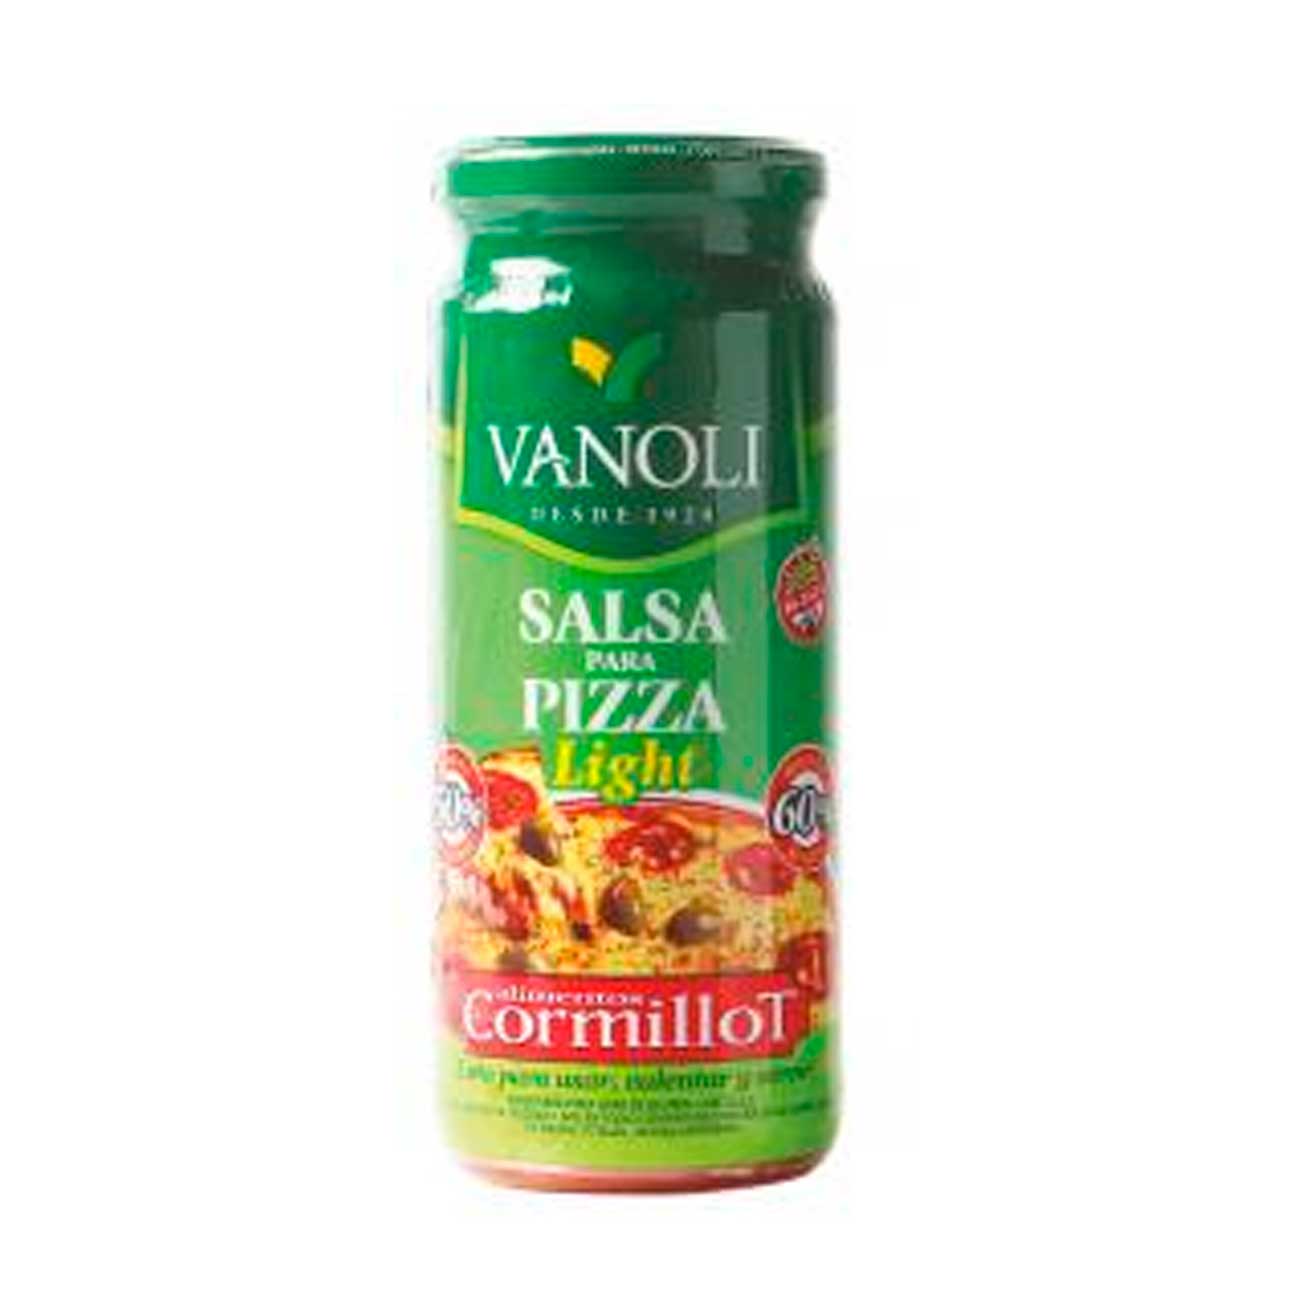 Salsa para pizza light Cormillot 360g VANOLI